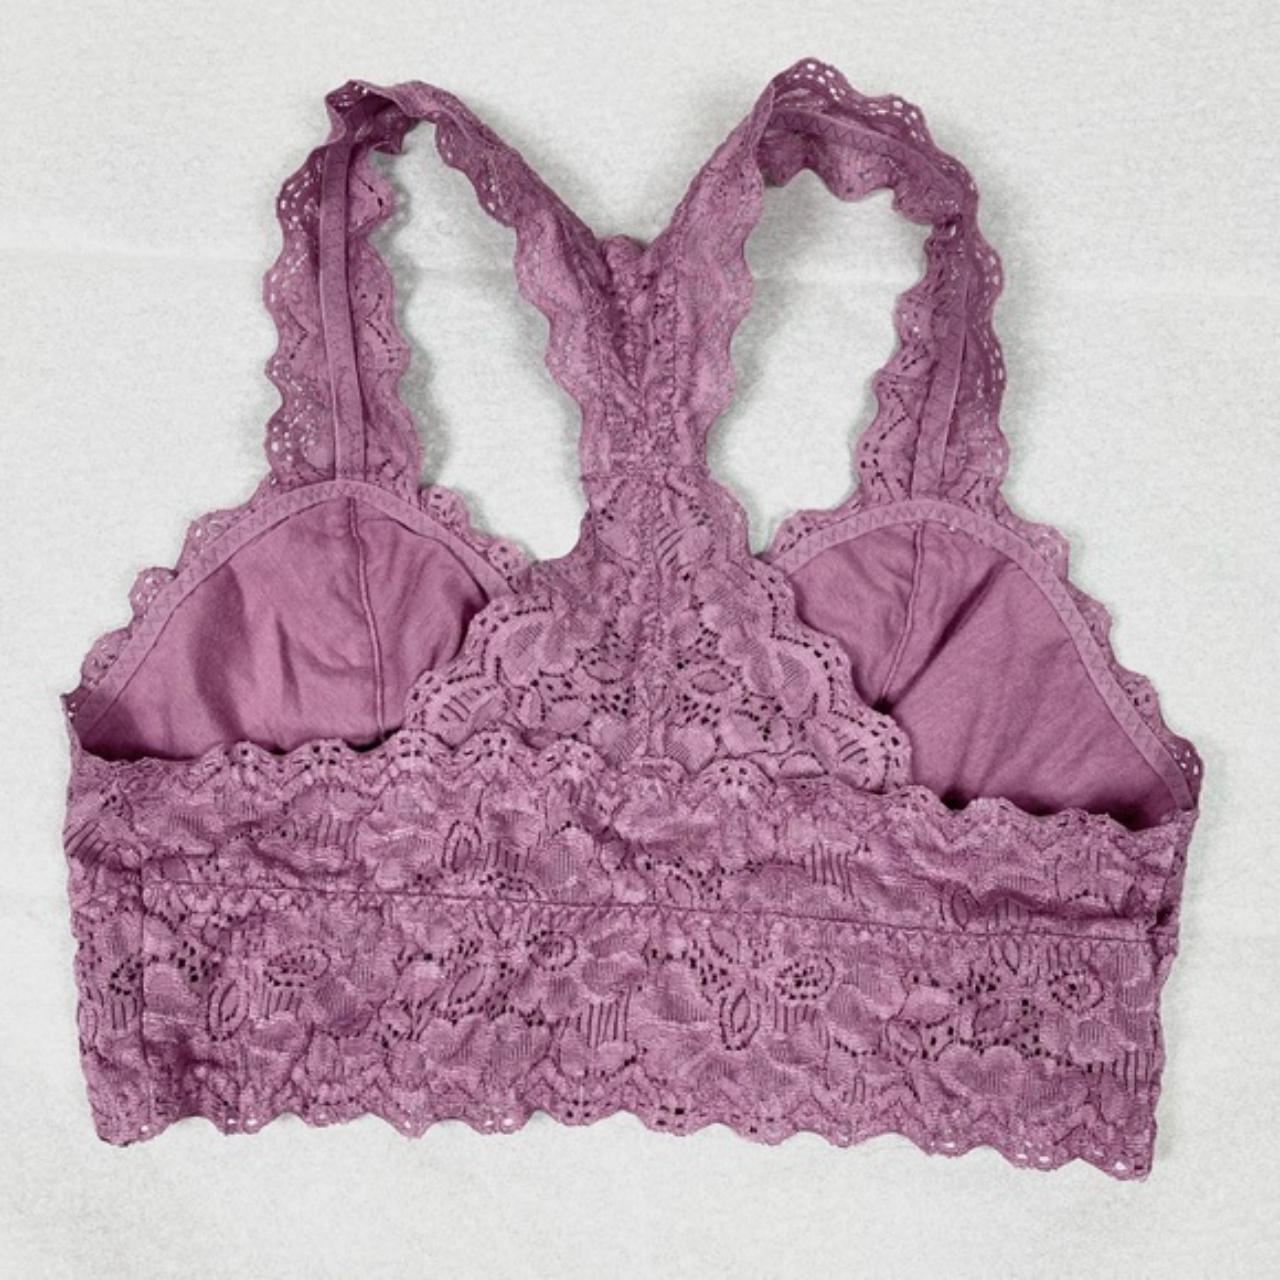 Product Image 2 - Felina lilac lace racerback bralette
Gently